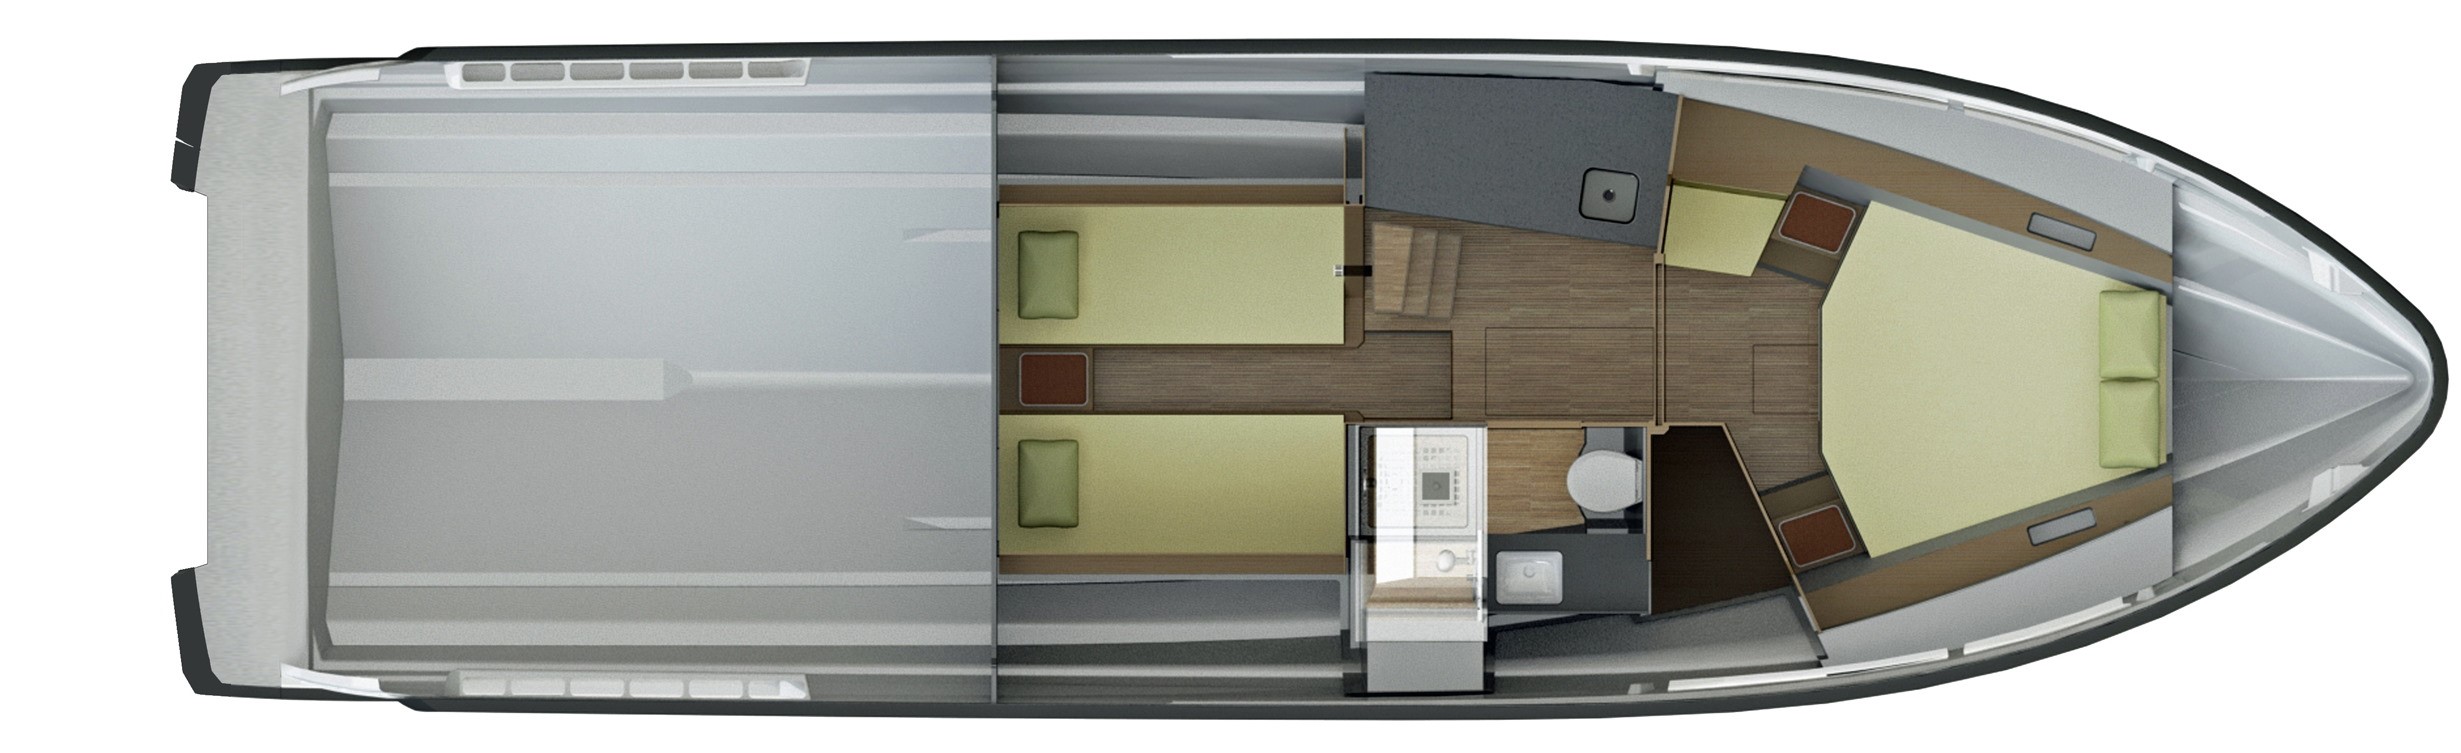 Windy SR44 SX accommodations plan, cabin layout